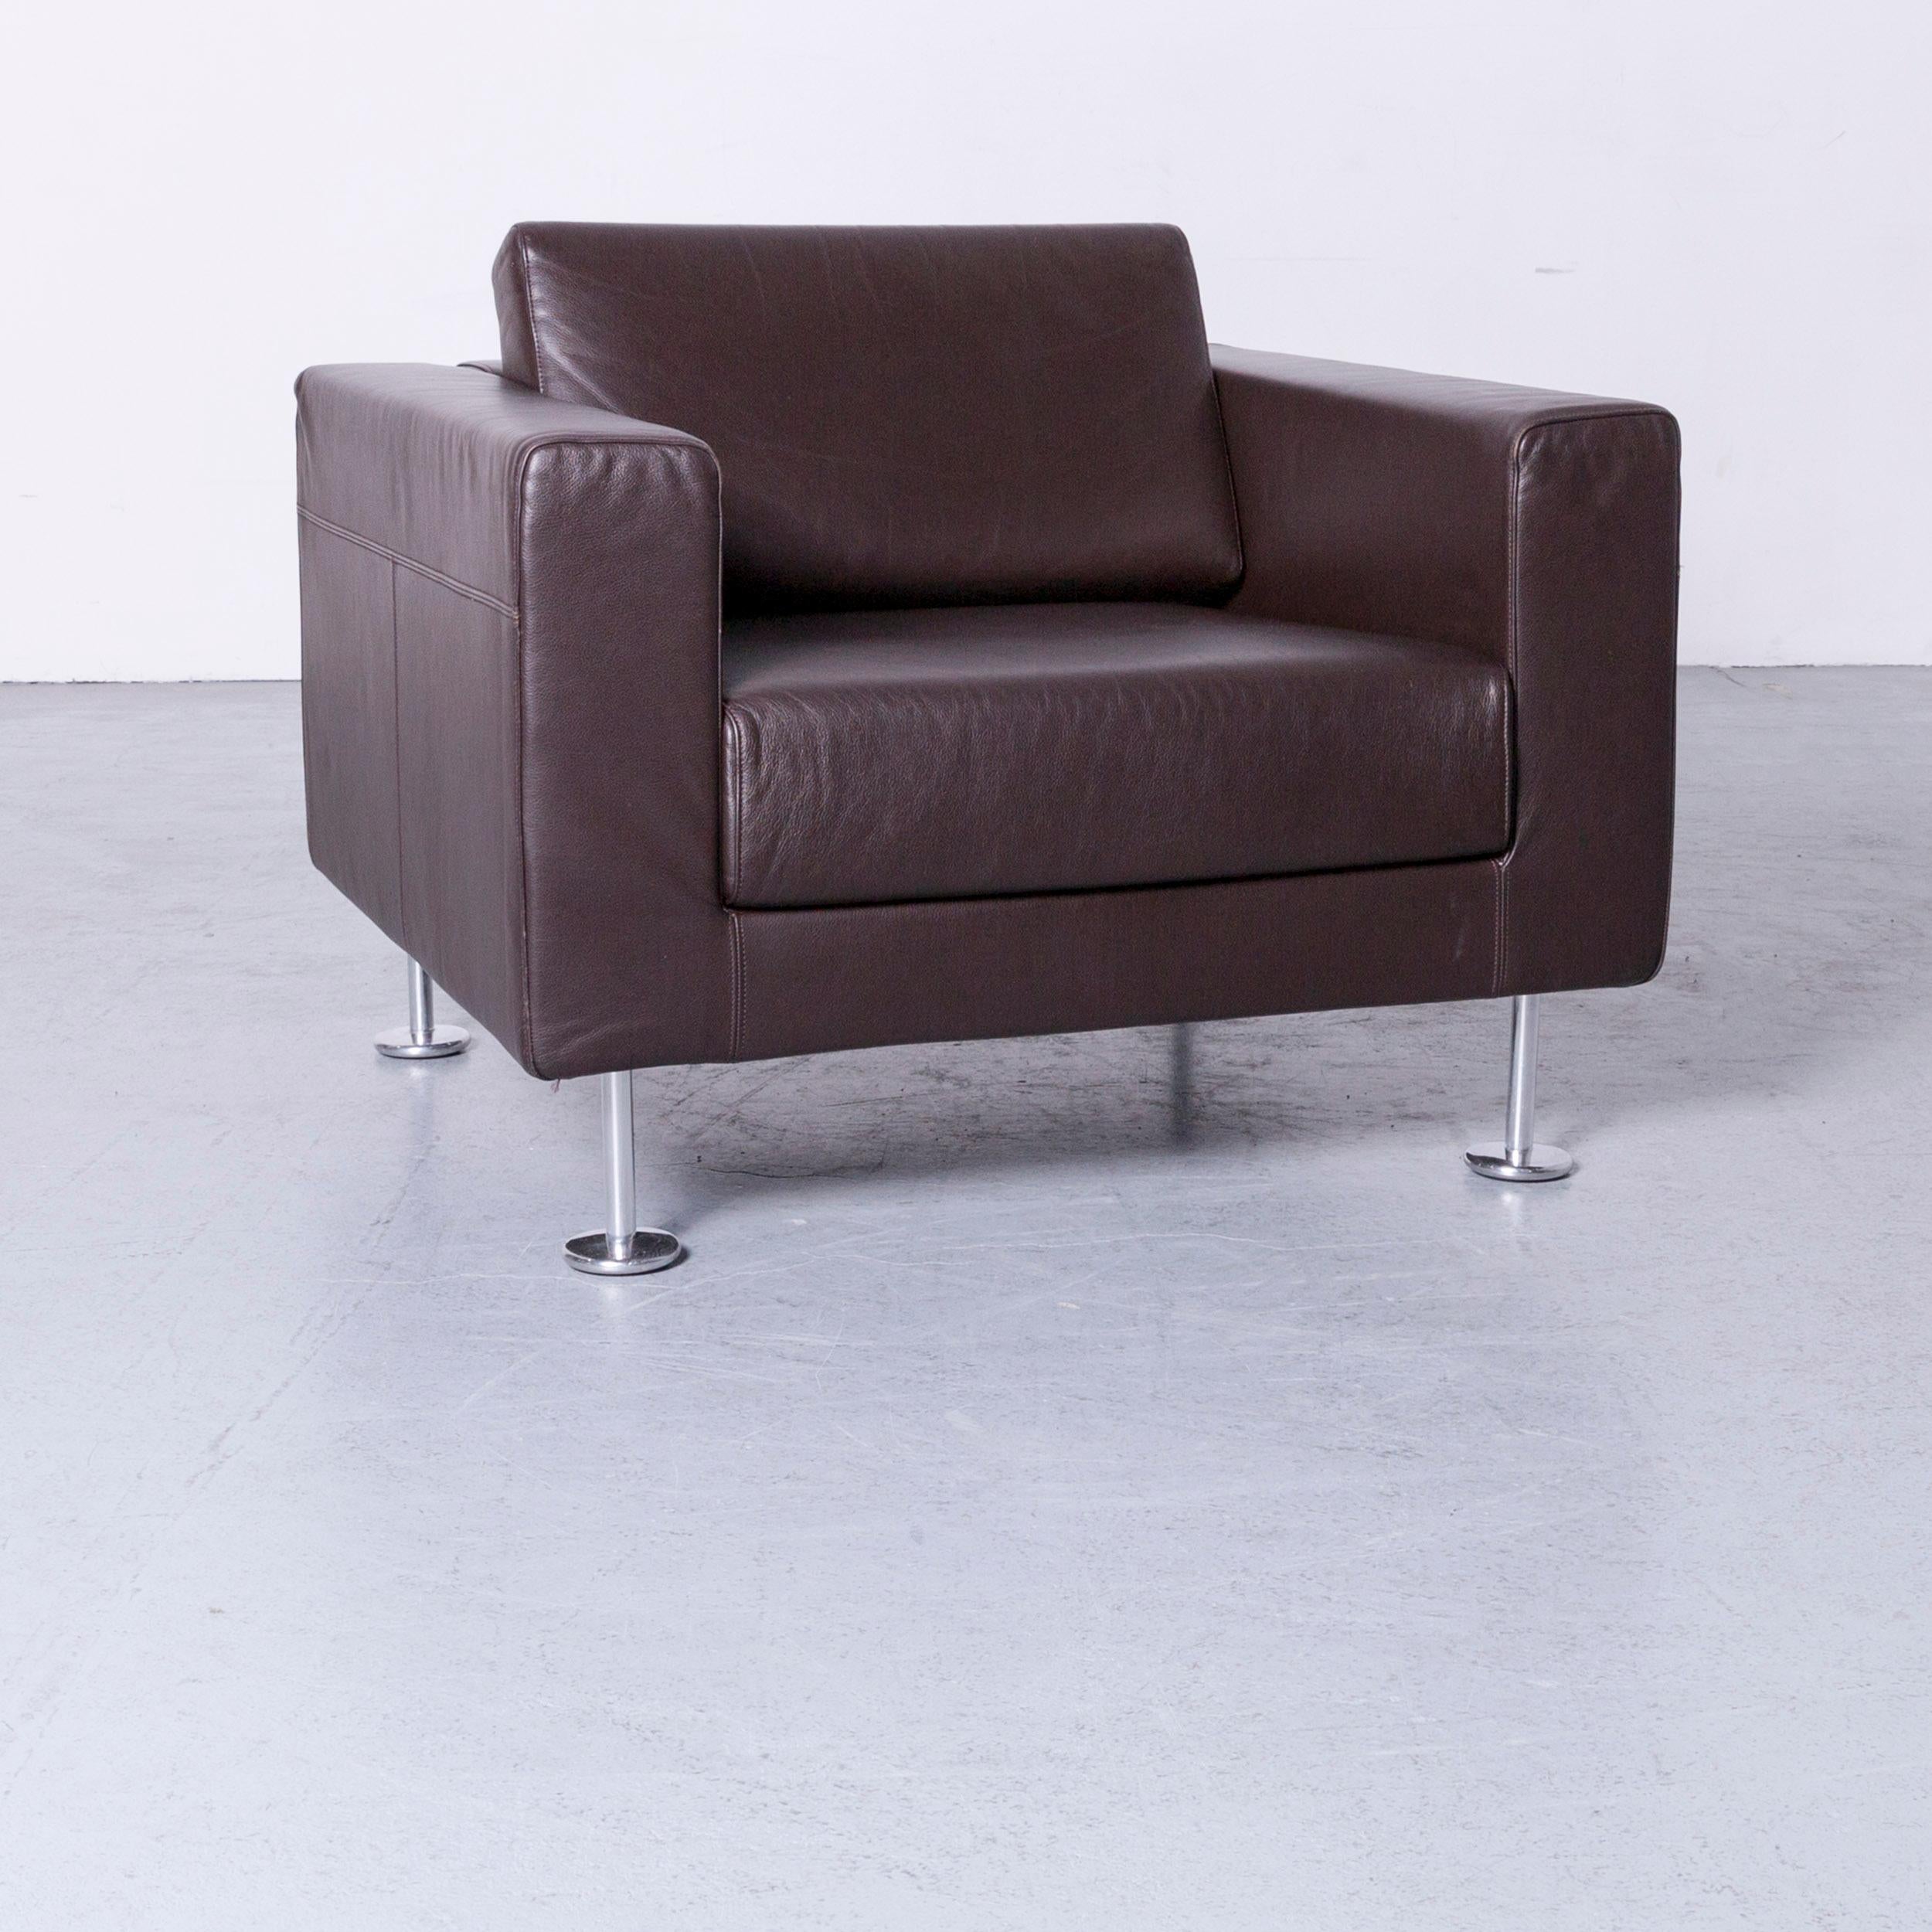 Vitra park armchair set of two designer leather brown aluminium lounge.